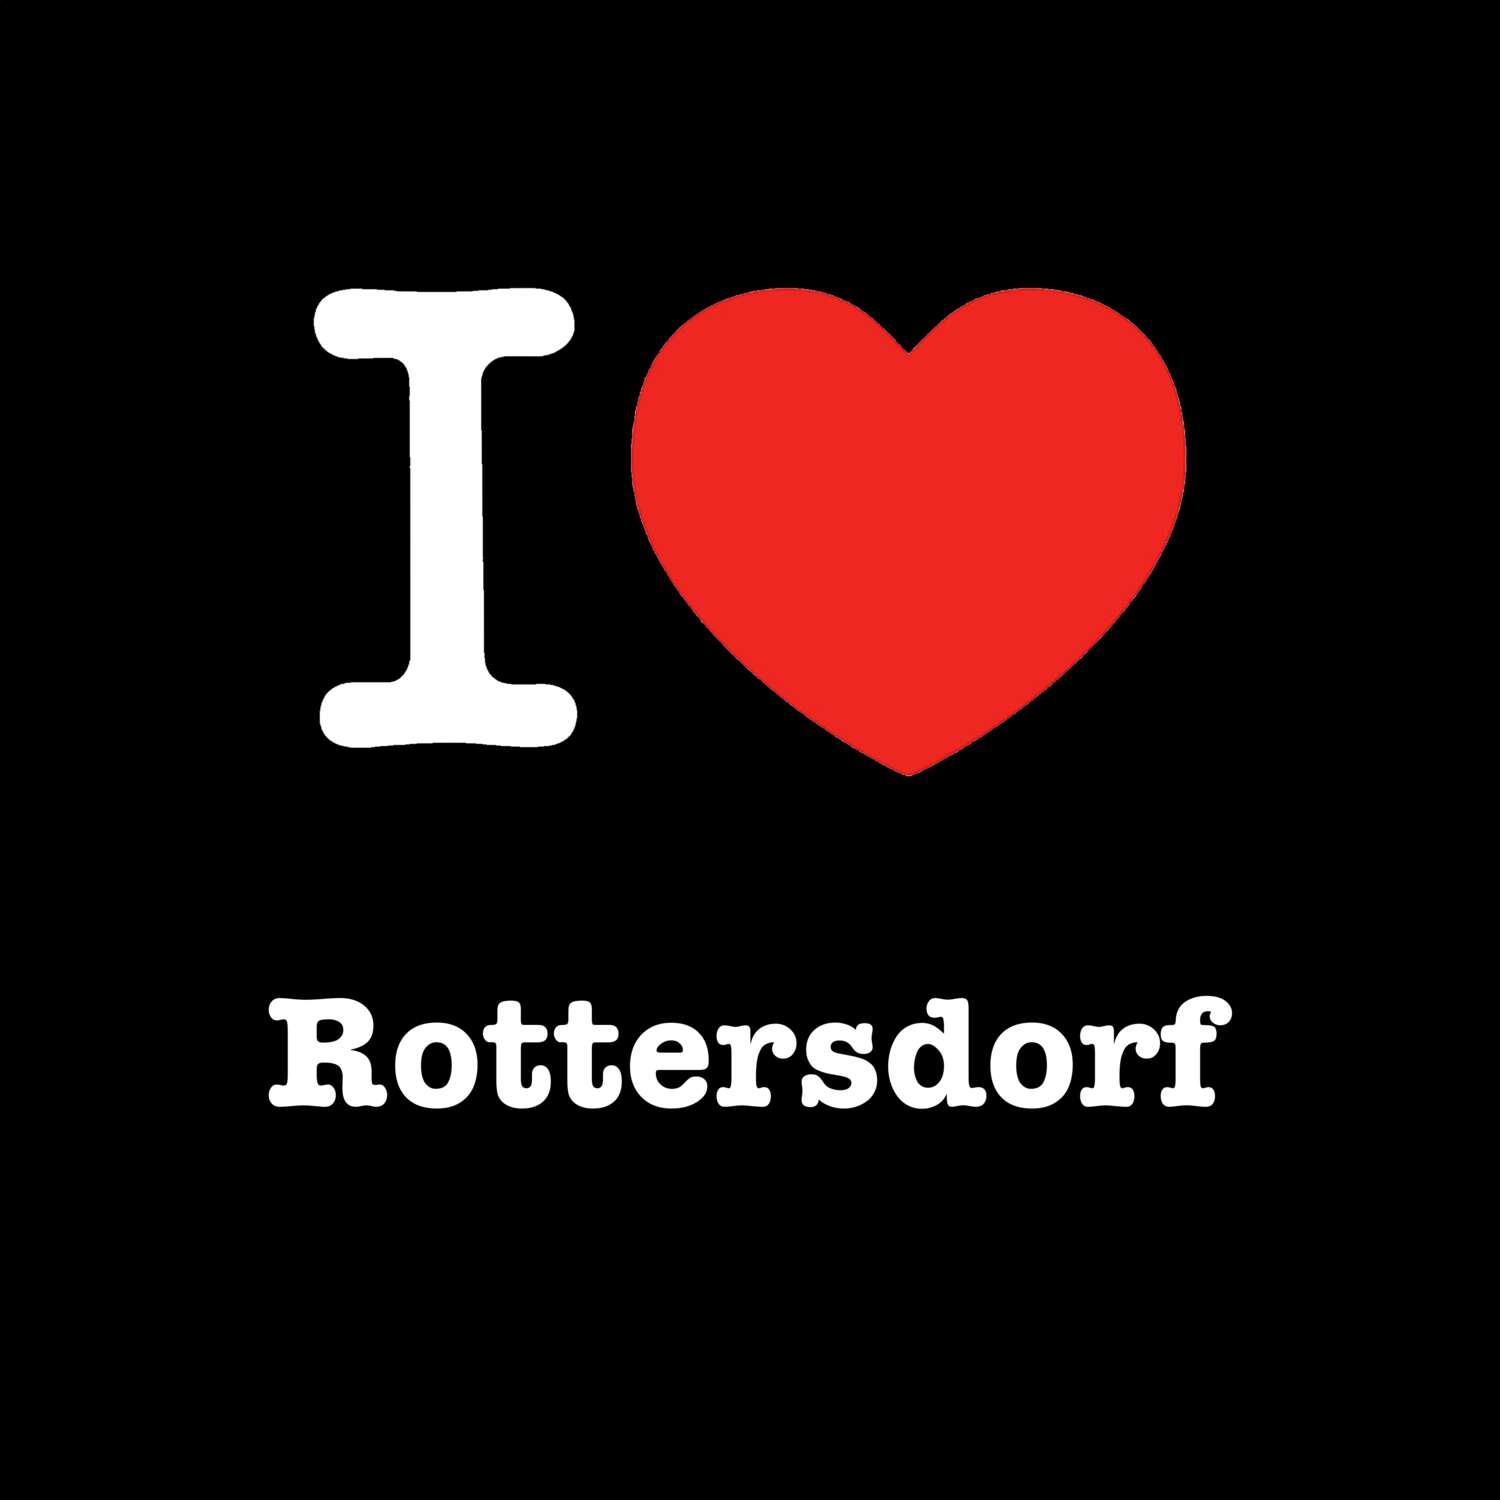 Rottersdorf T-Shirt »I love«